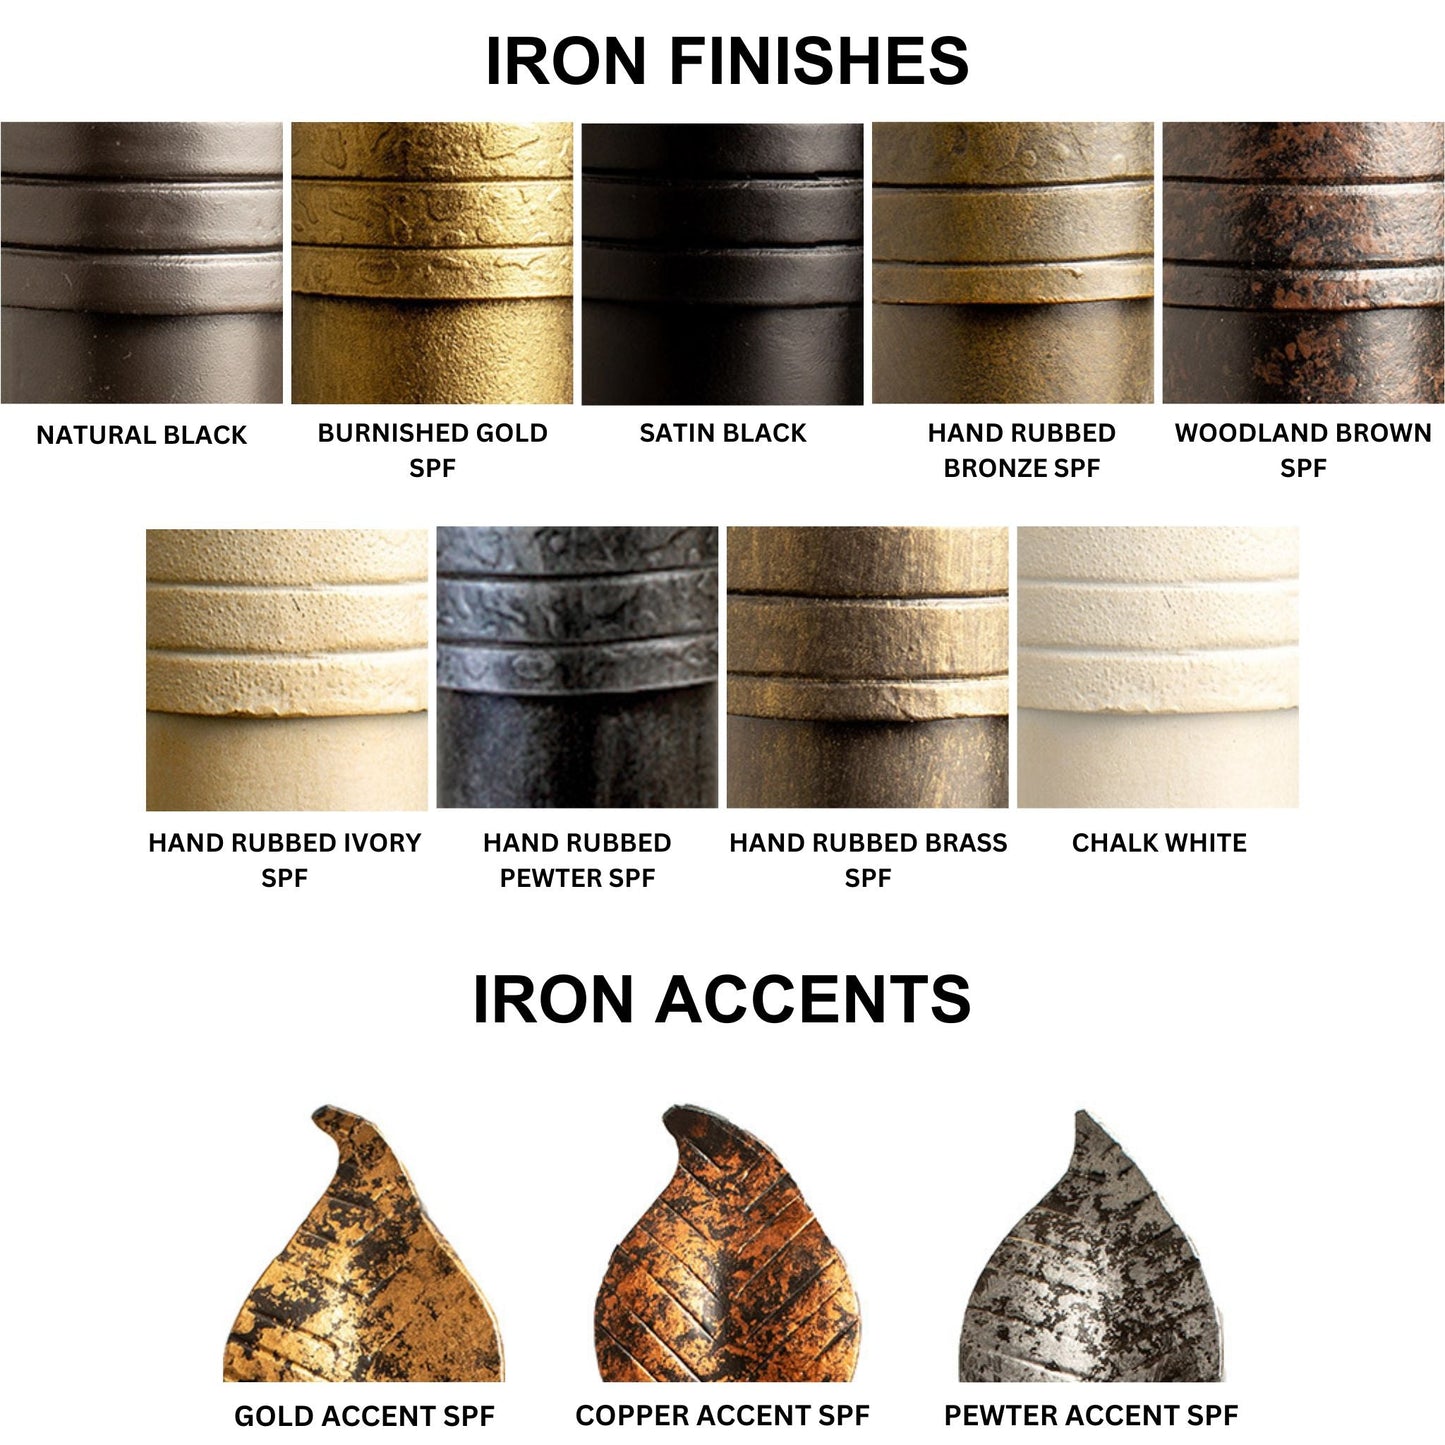 Stone County Ironworks Sassafras 16" Hand Rubbed Bronze Iron Towel Bar